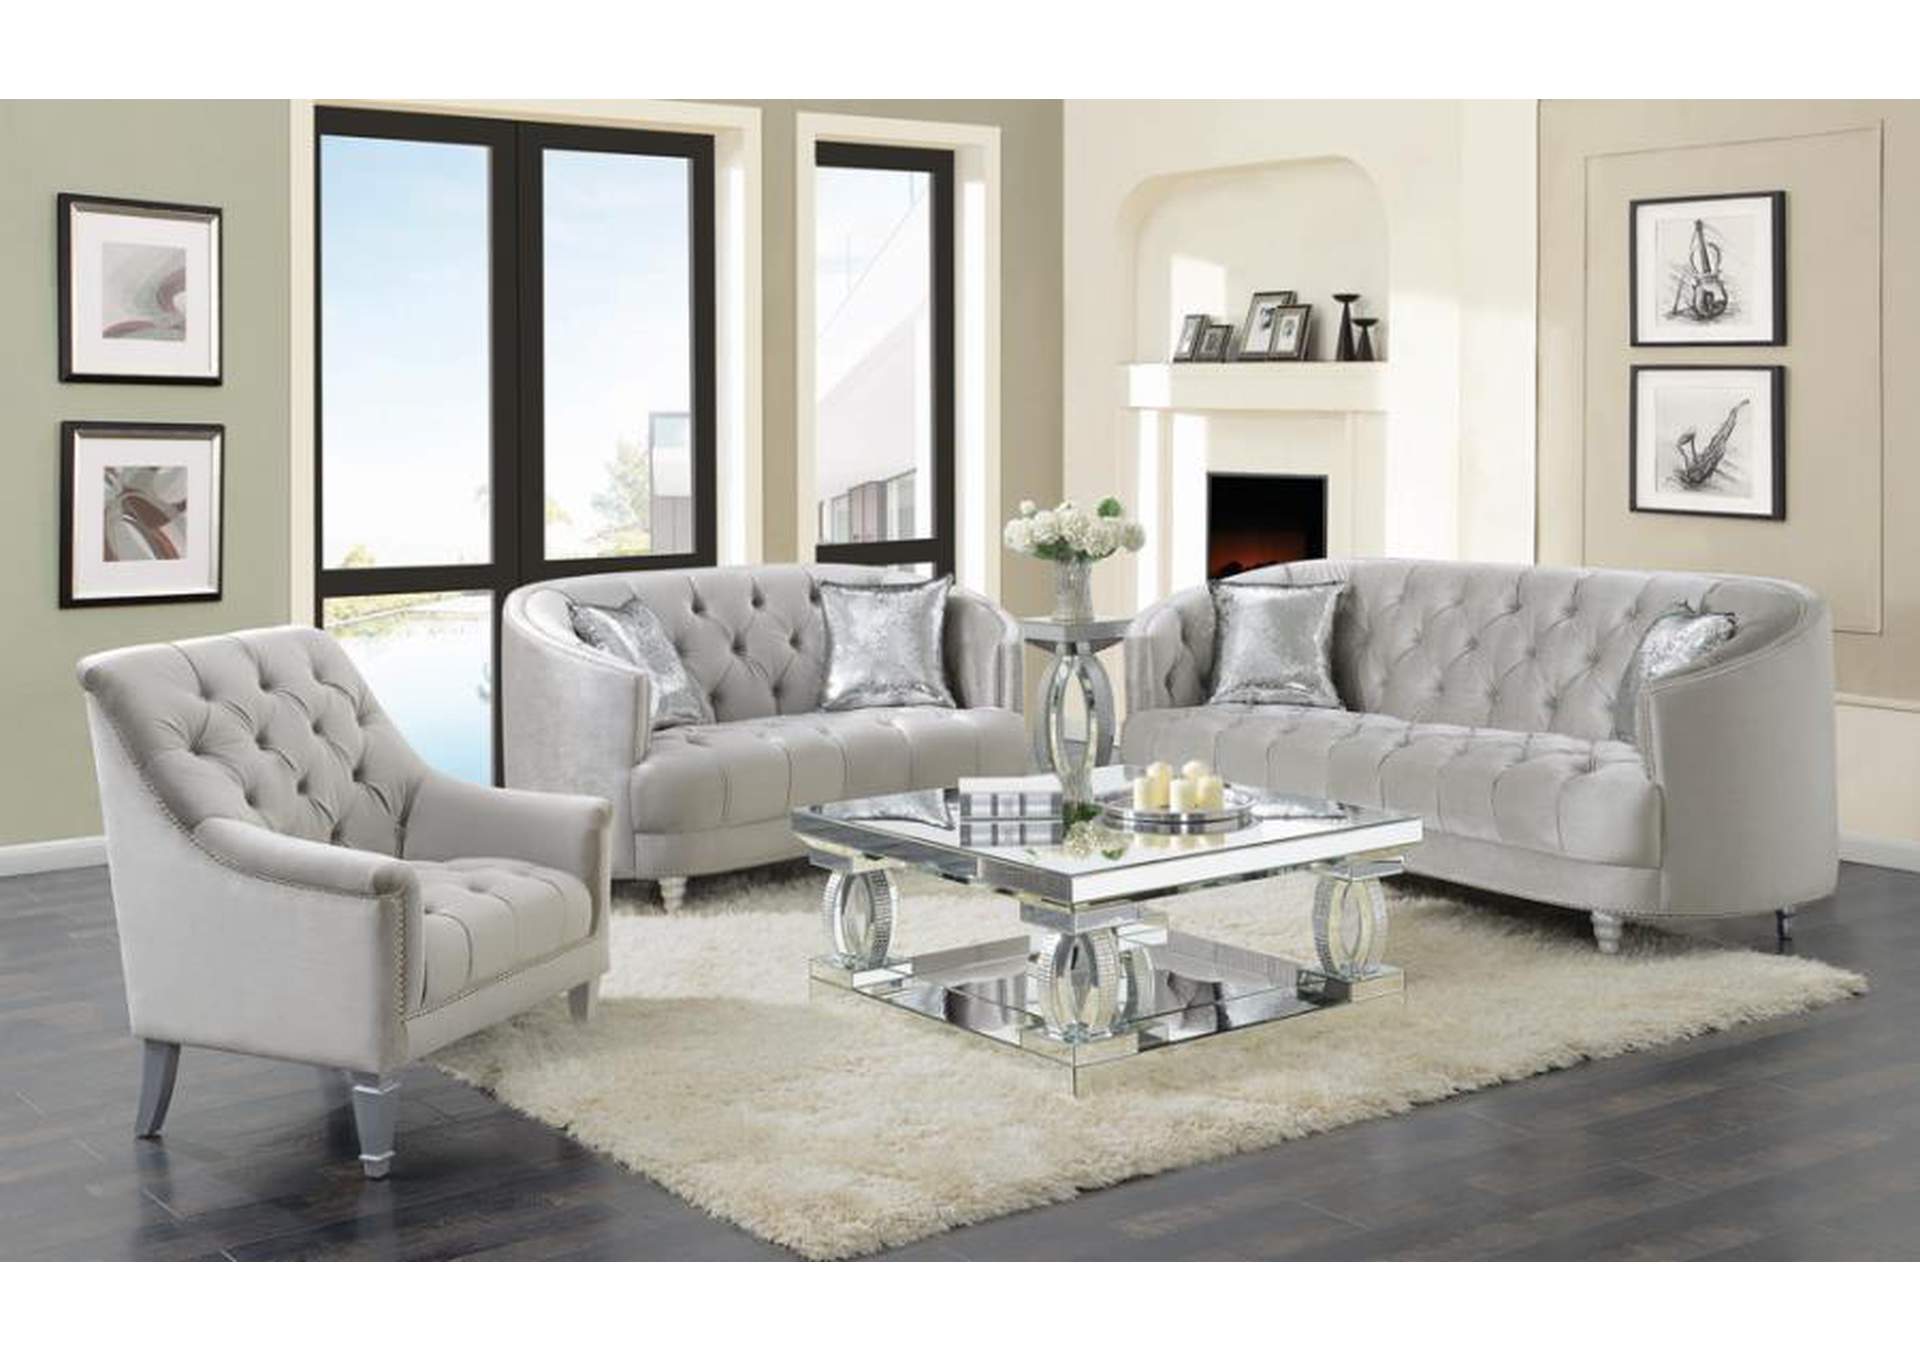 Avonlea 2-Piece Tufted Living Room Set Grey,Coaster Furniture